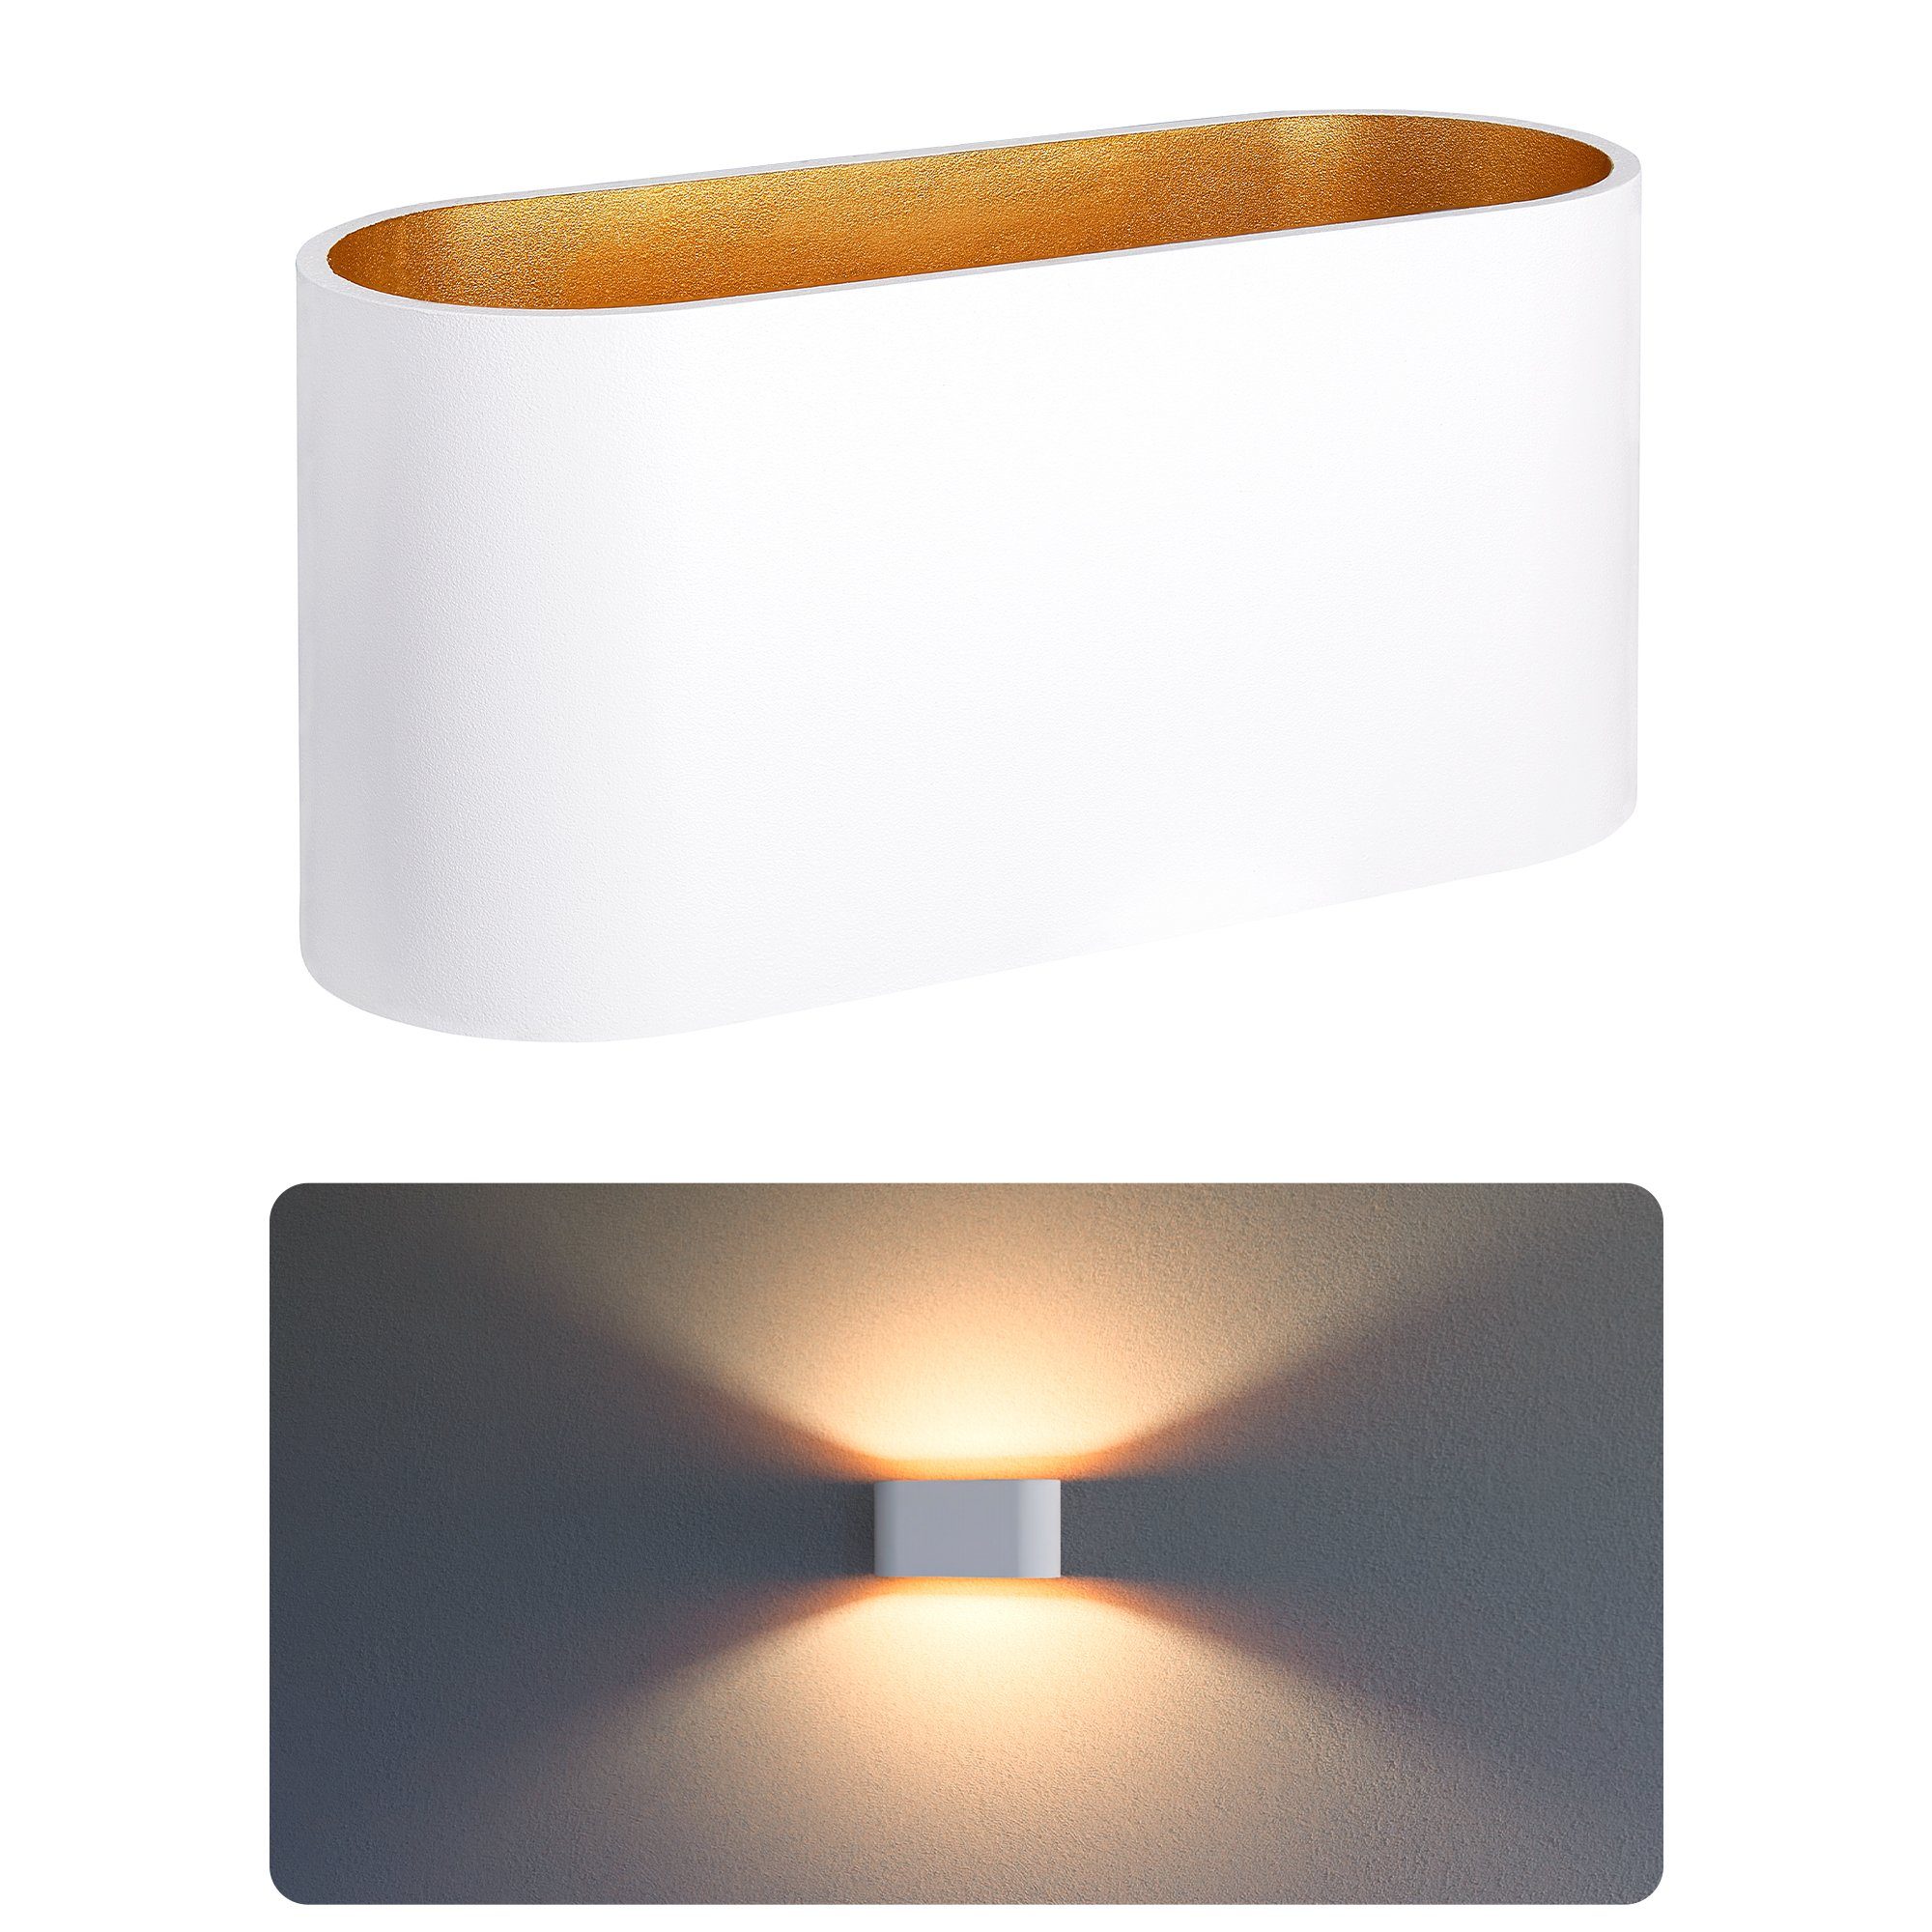 SSC-LUXon LED Wandleuchte JOBERO Wandlampe weiß gold Up & Down mit G9 LED warmweiß 2W, Warmweiß | Wandleuchten